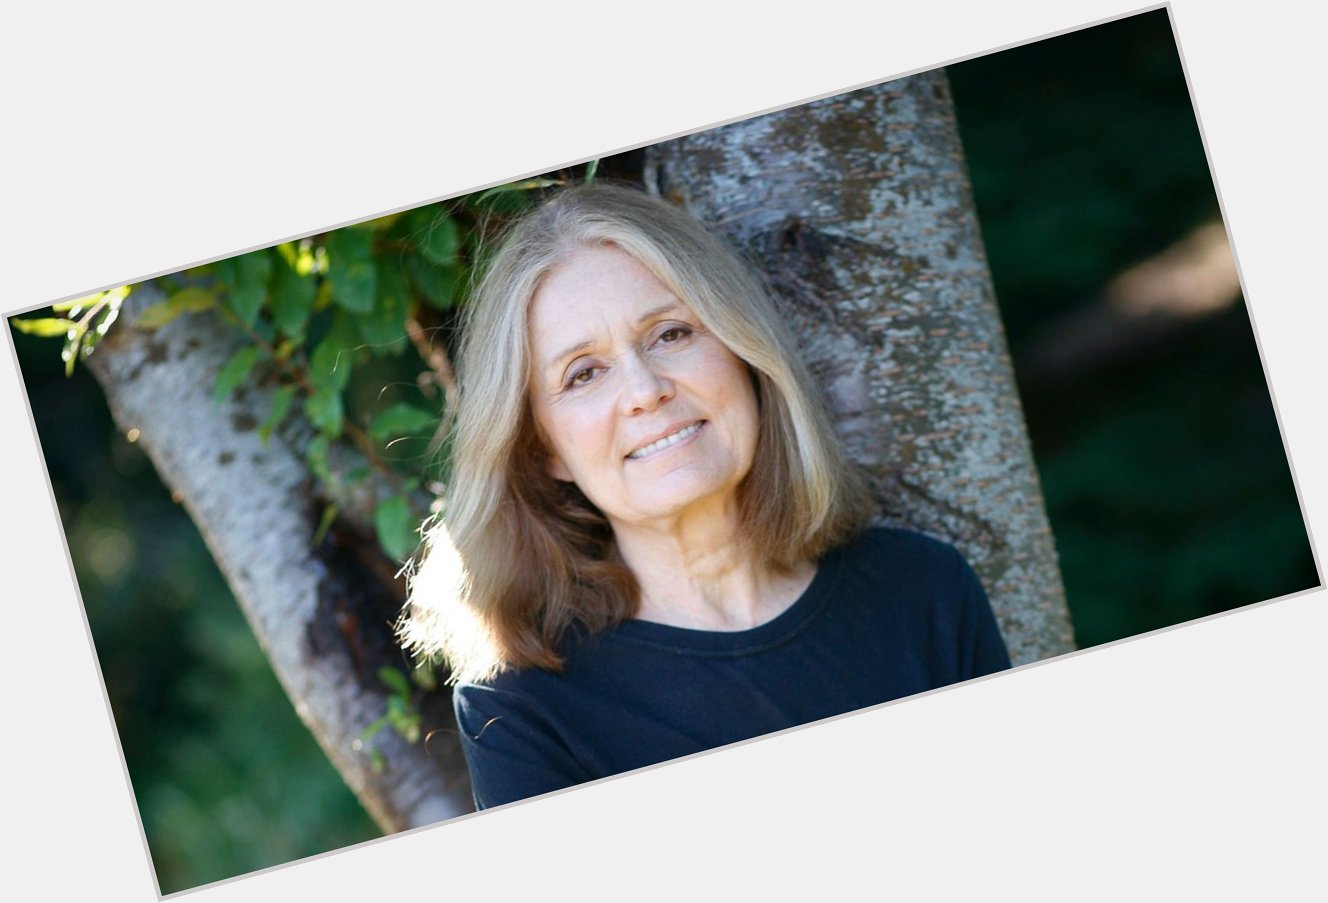 A happy belated birthday wish for Toledo-born author and activist Gloria Steinem! 